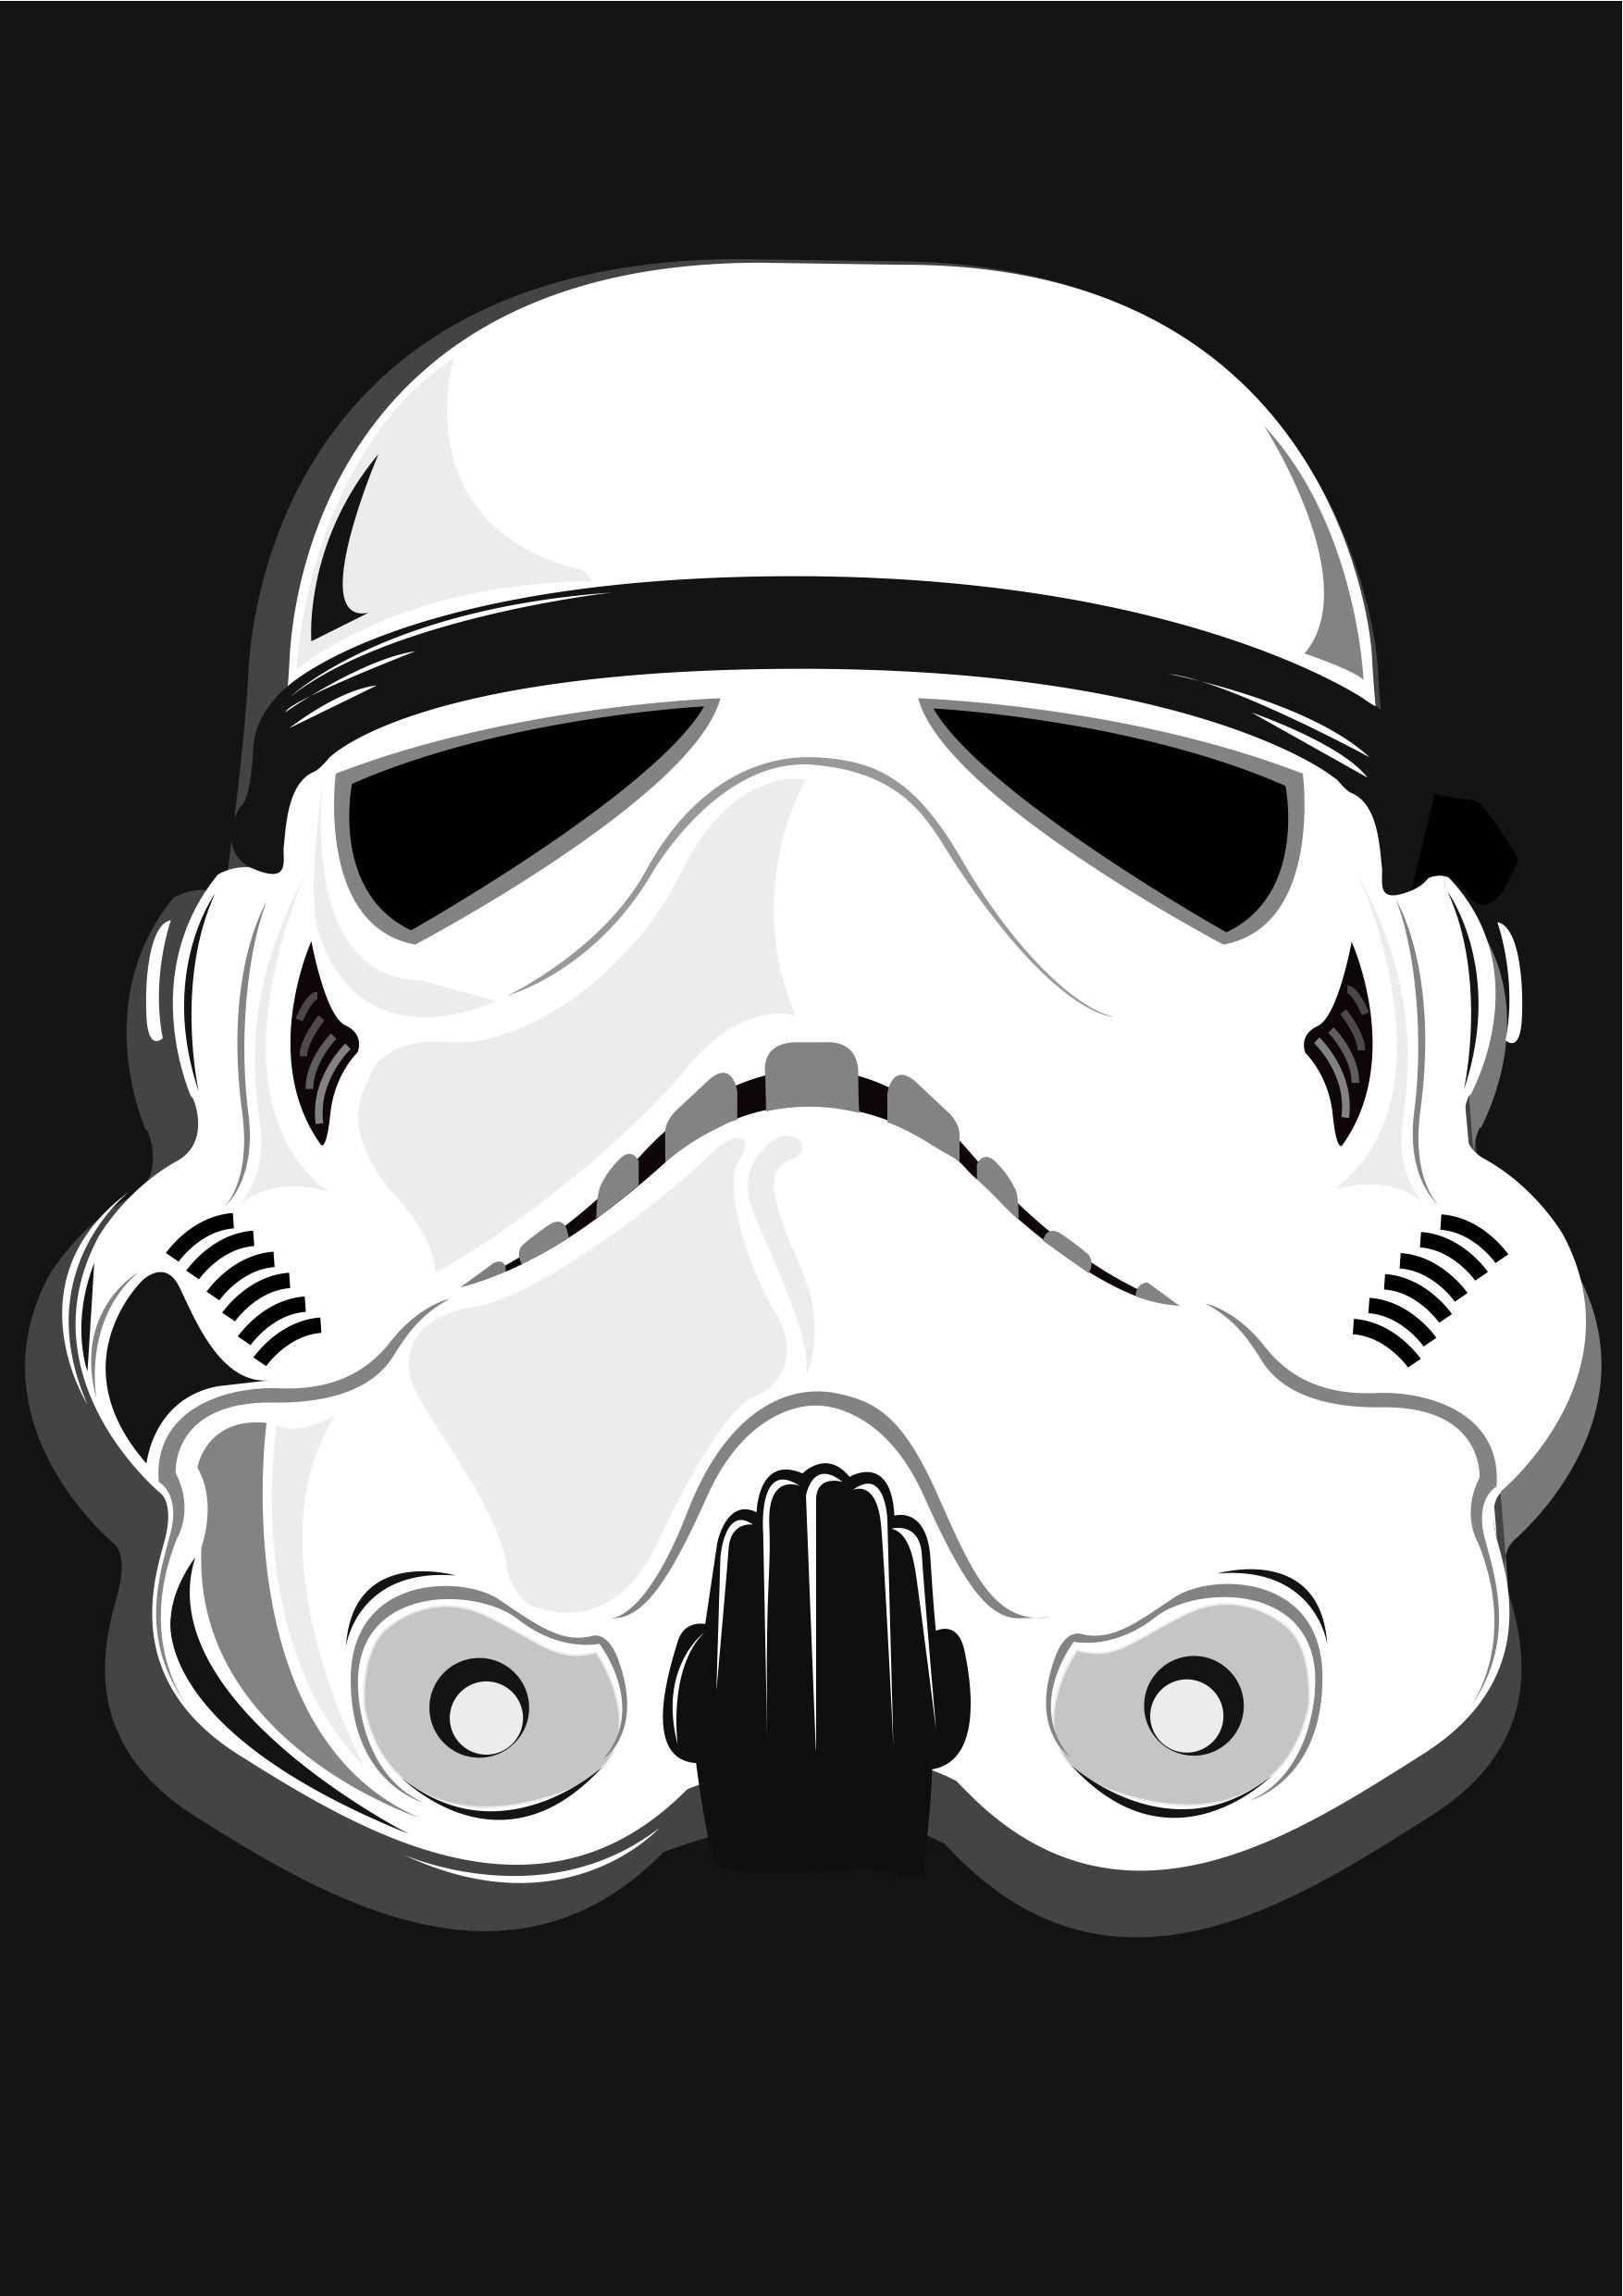 Stormtrooper Helmet. Star wars art, Star wars picture